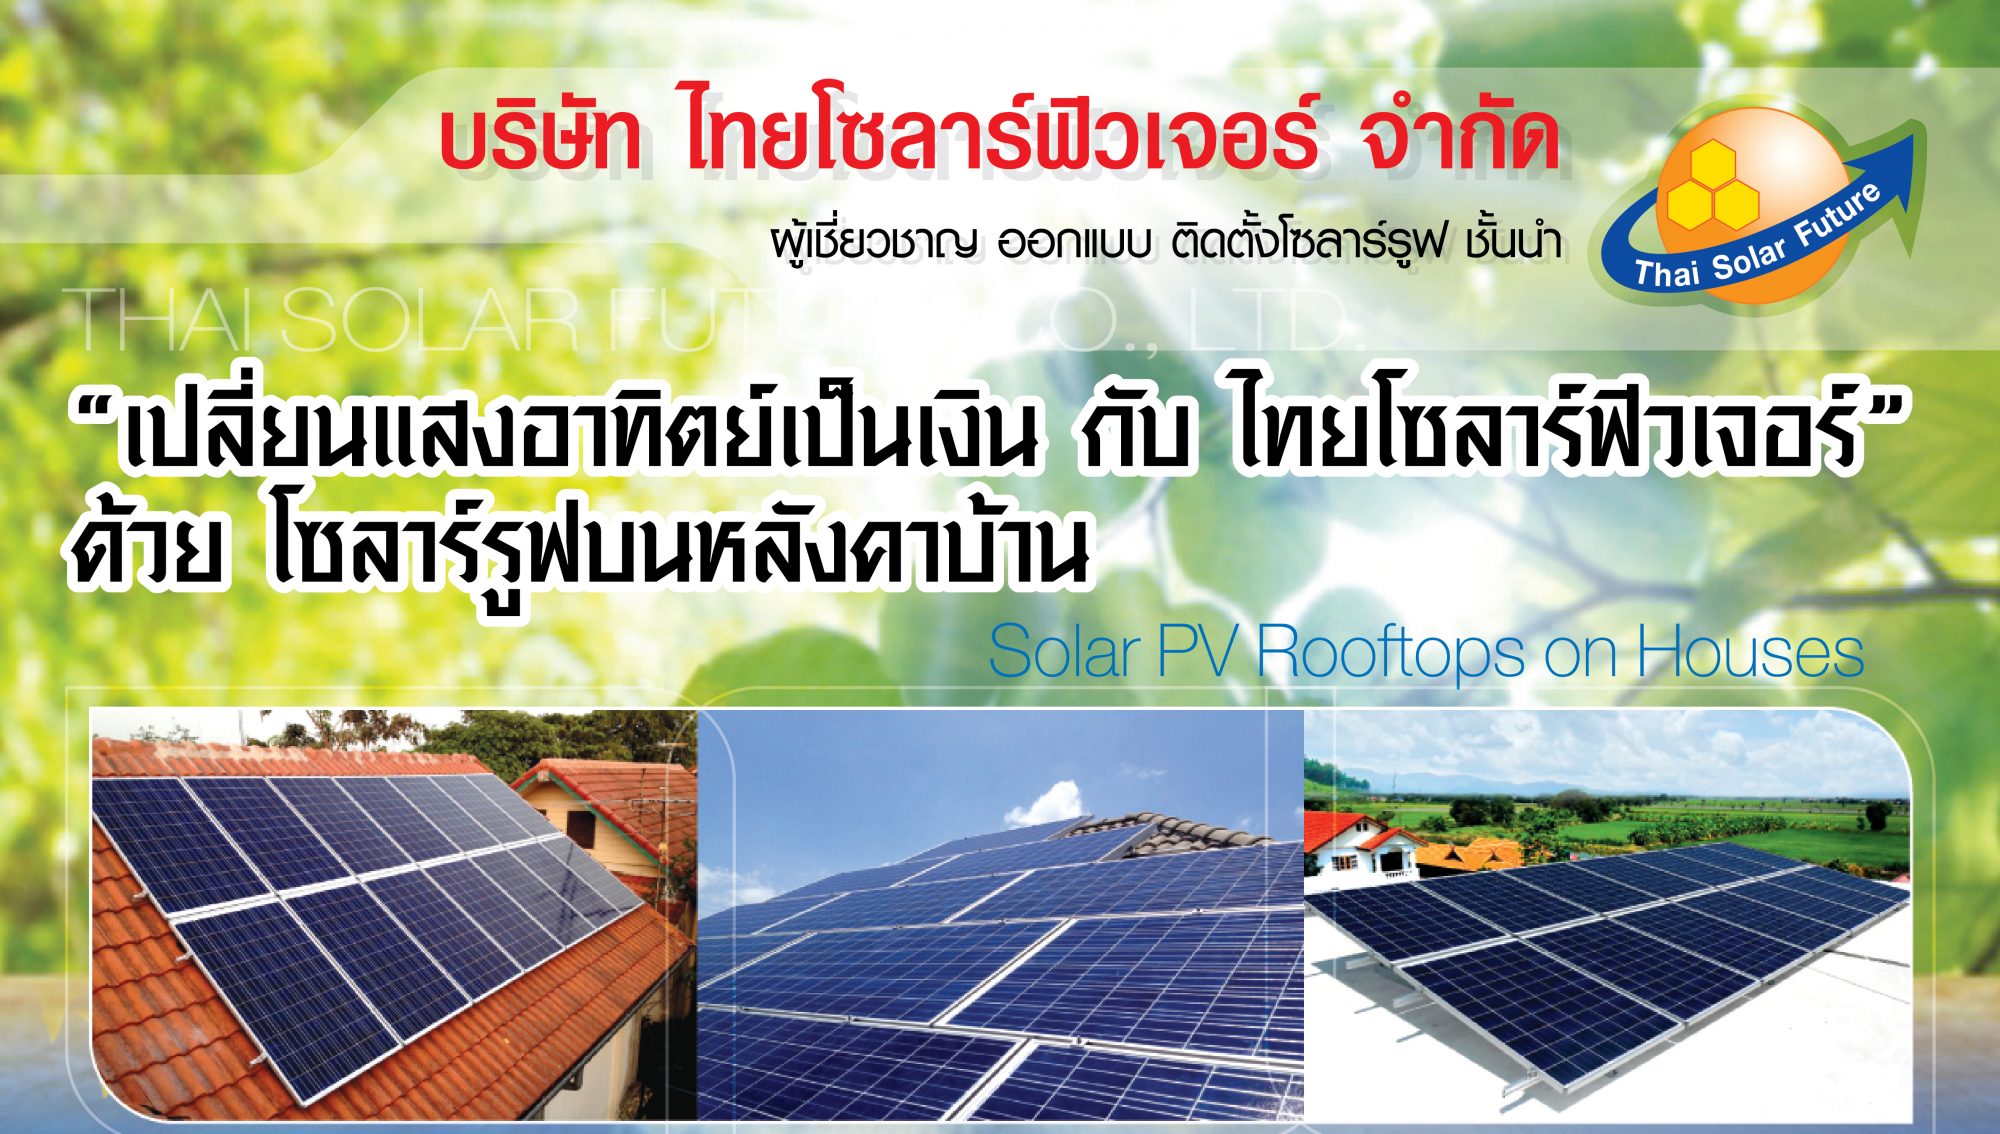 Thai Solar Future Co., Ltd.